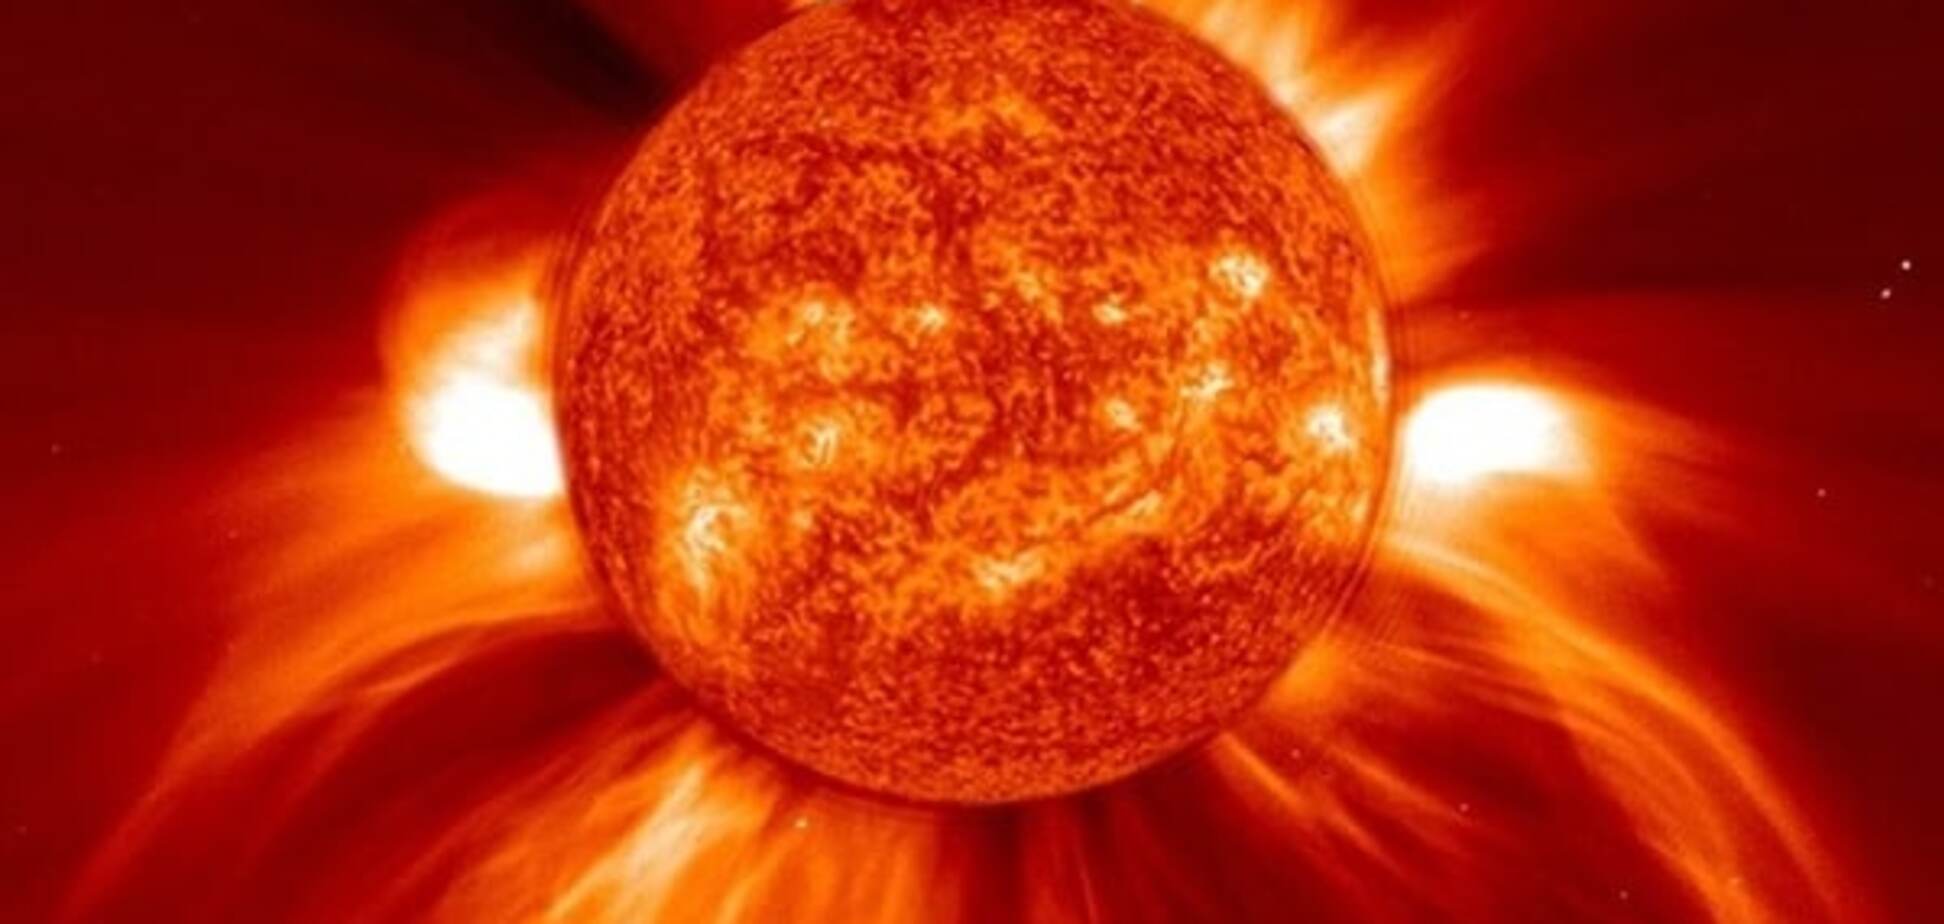 Лучшее за 20 лет: фото вспышки на Солнце победило в конкурсе NASA